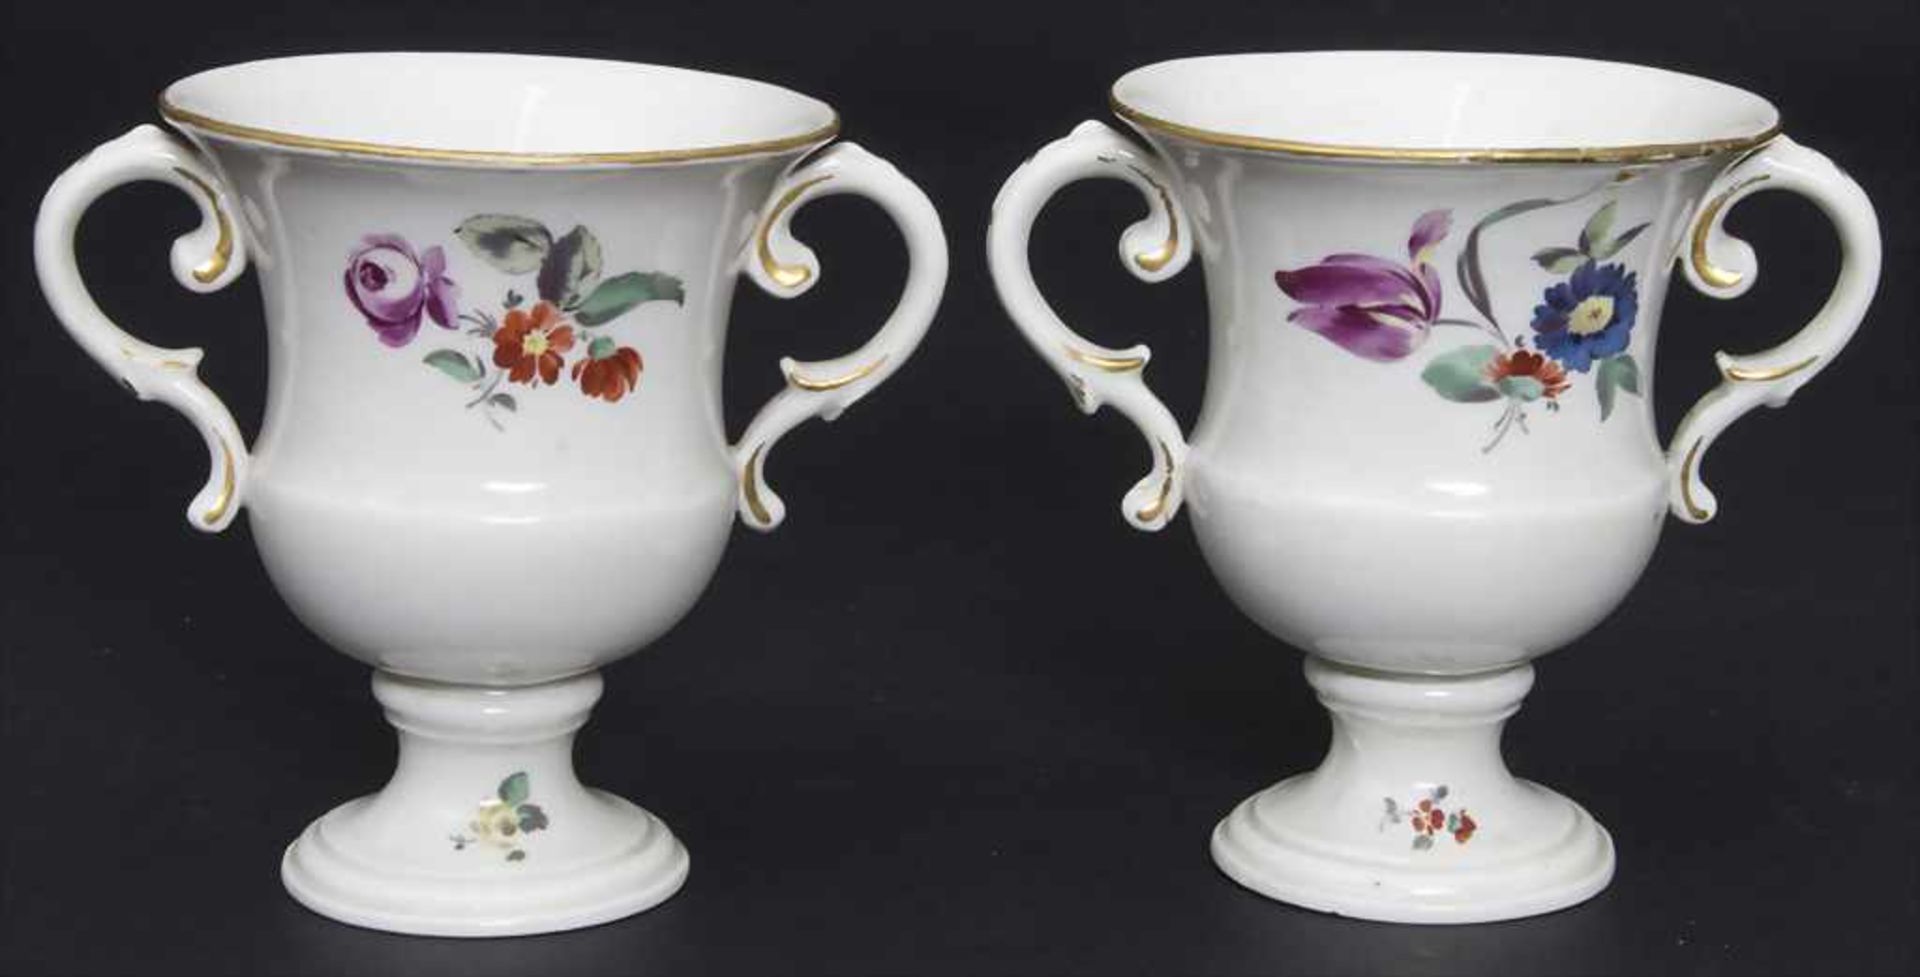 Paar Vasen mit Henkeln / 2 vases with handles, Frankenthal, um 1740Material: Porzellan, farbig